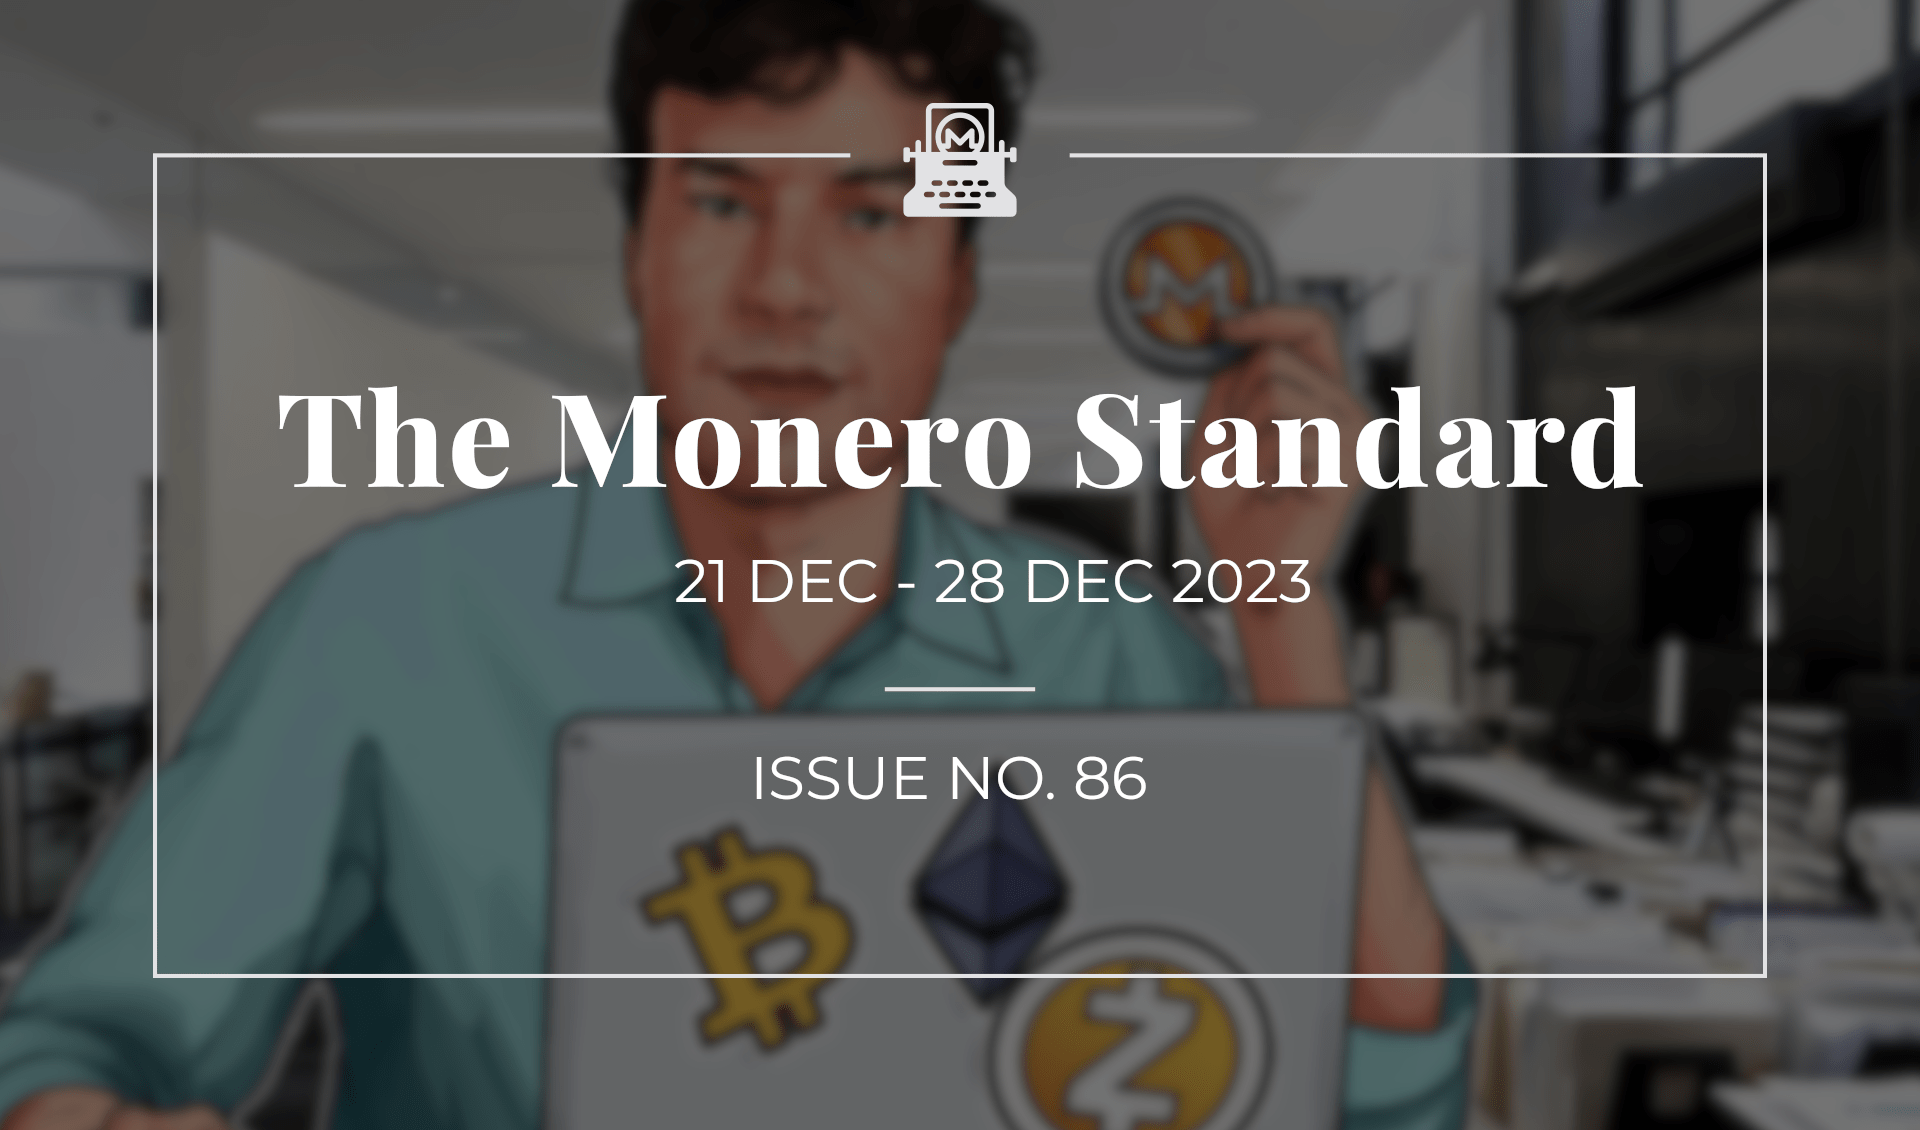 The Monero Standard #86: 21 Dec 2023 - 28 Dec 2023